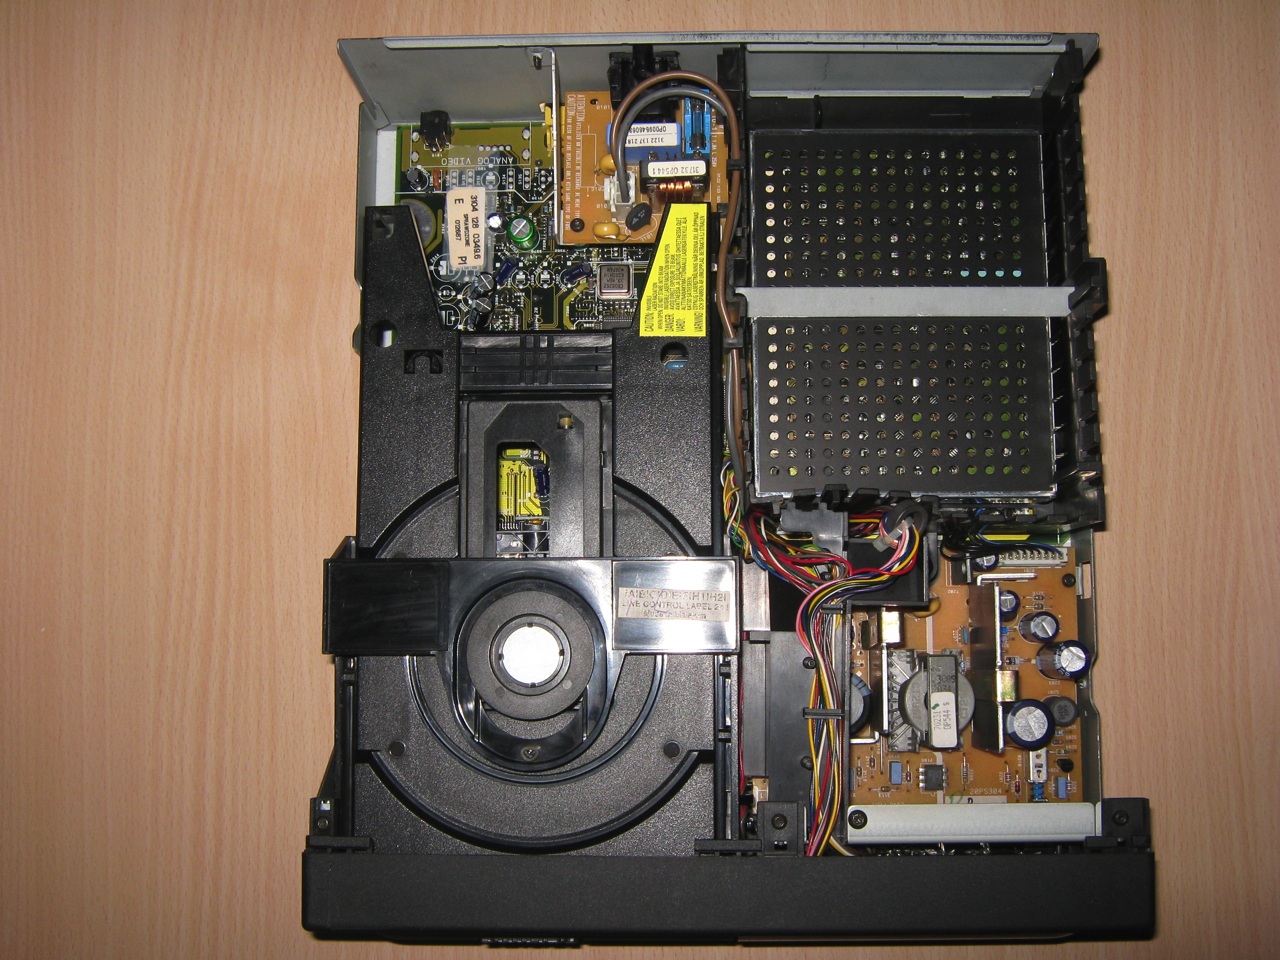 Philips Cd I 470 Compact Disc Interactive Nightfall Blog Retrocomputermania Com